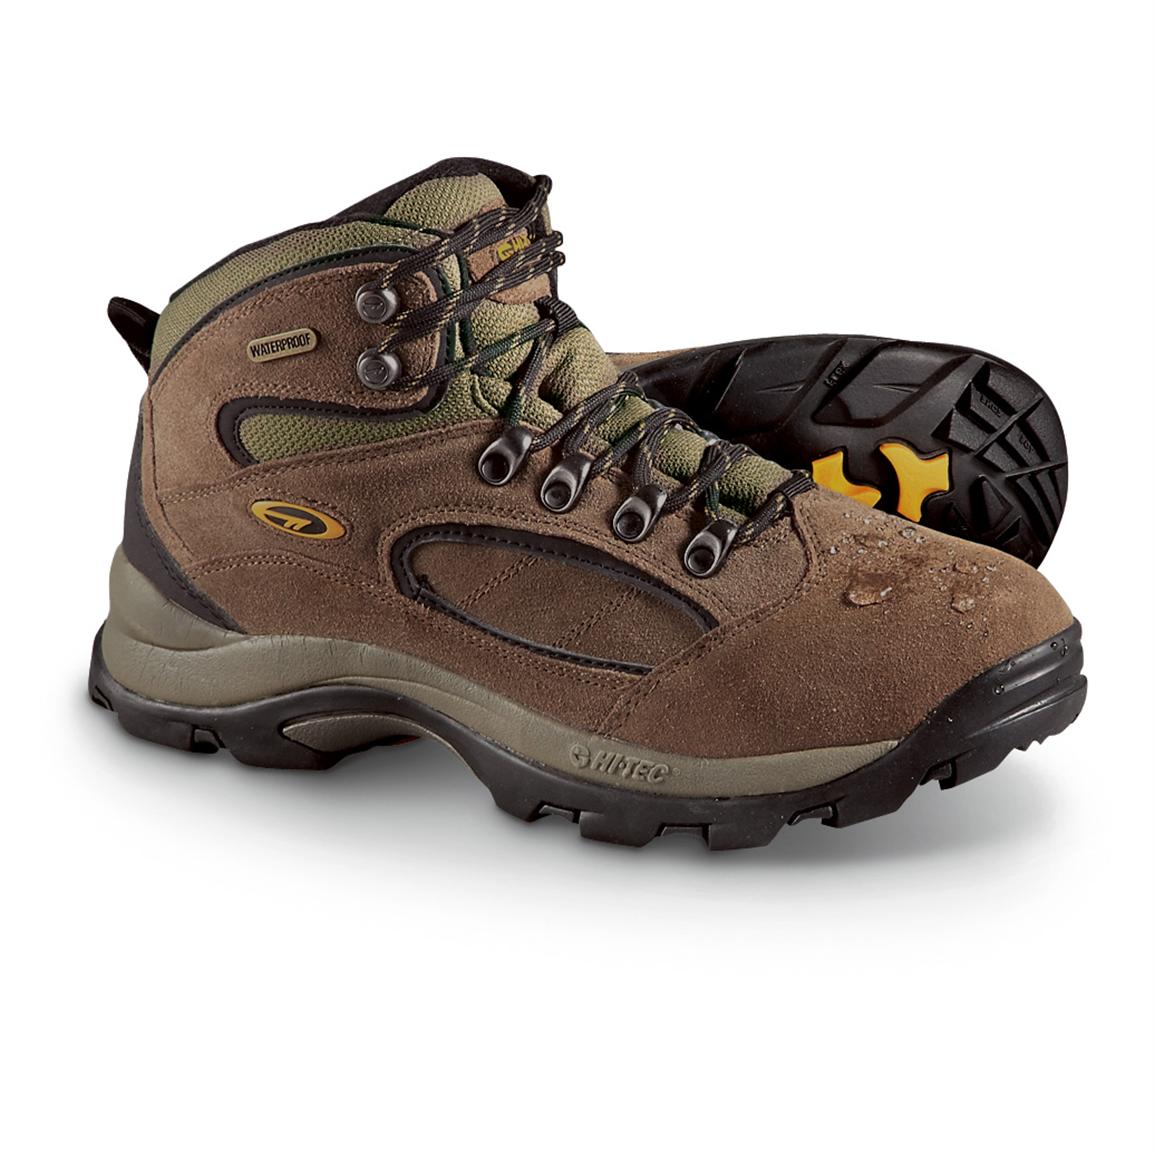 Men's Hi - Tec® Coronado Waterproof Hiking Boots, Smokey Brown / Gold